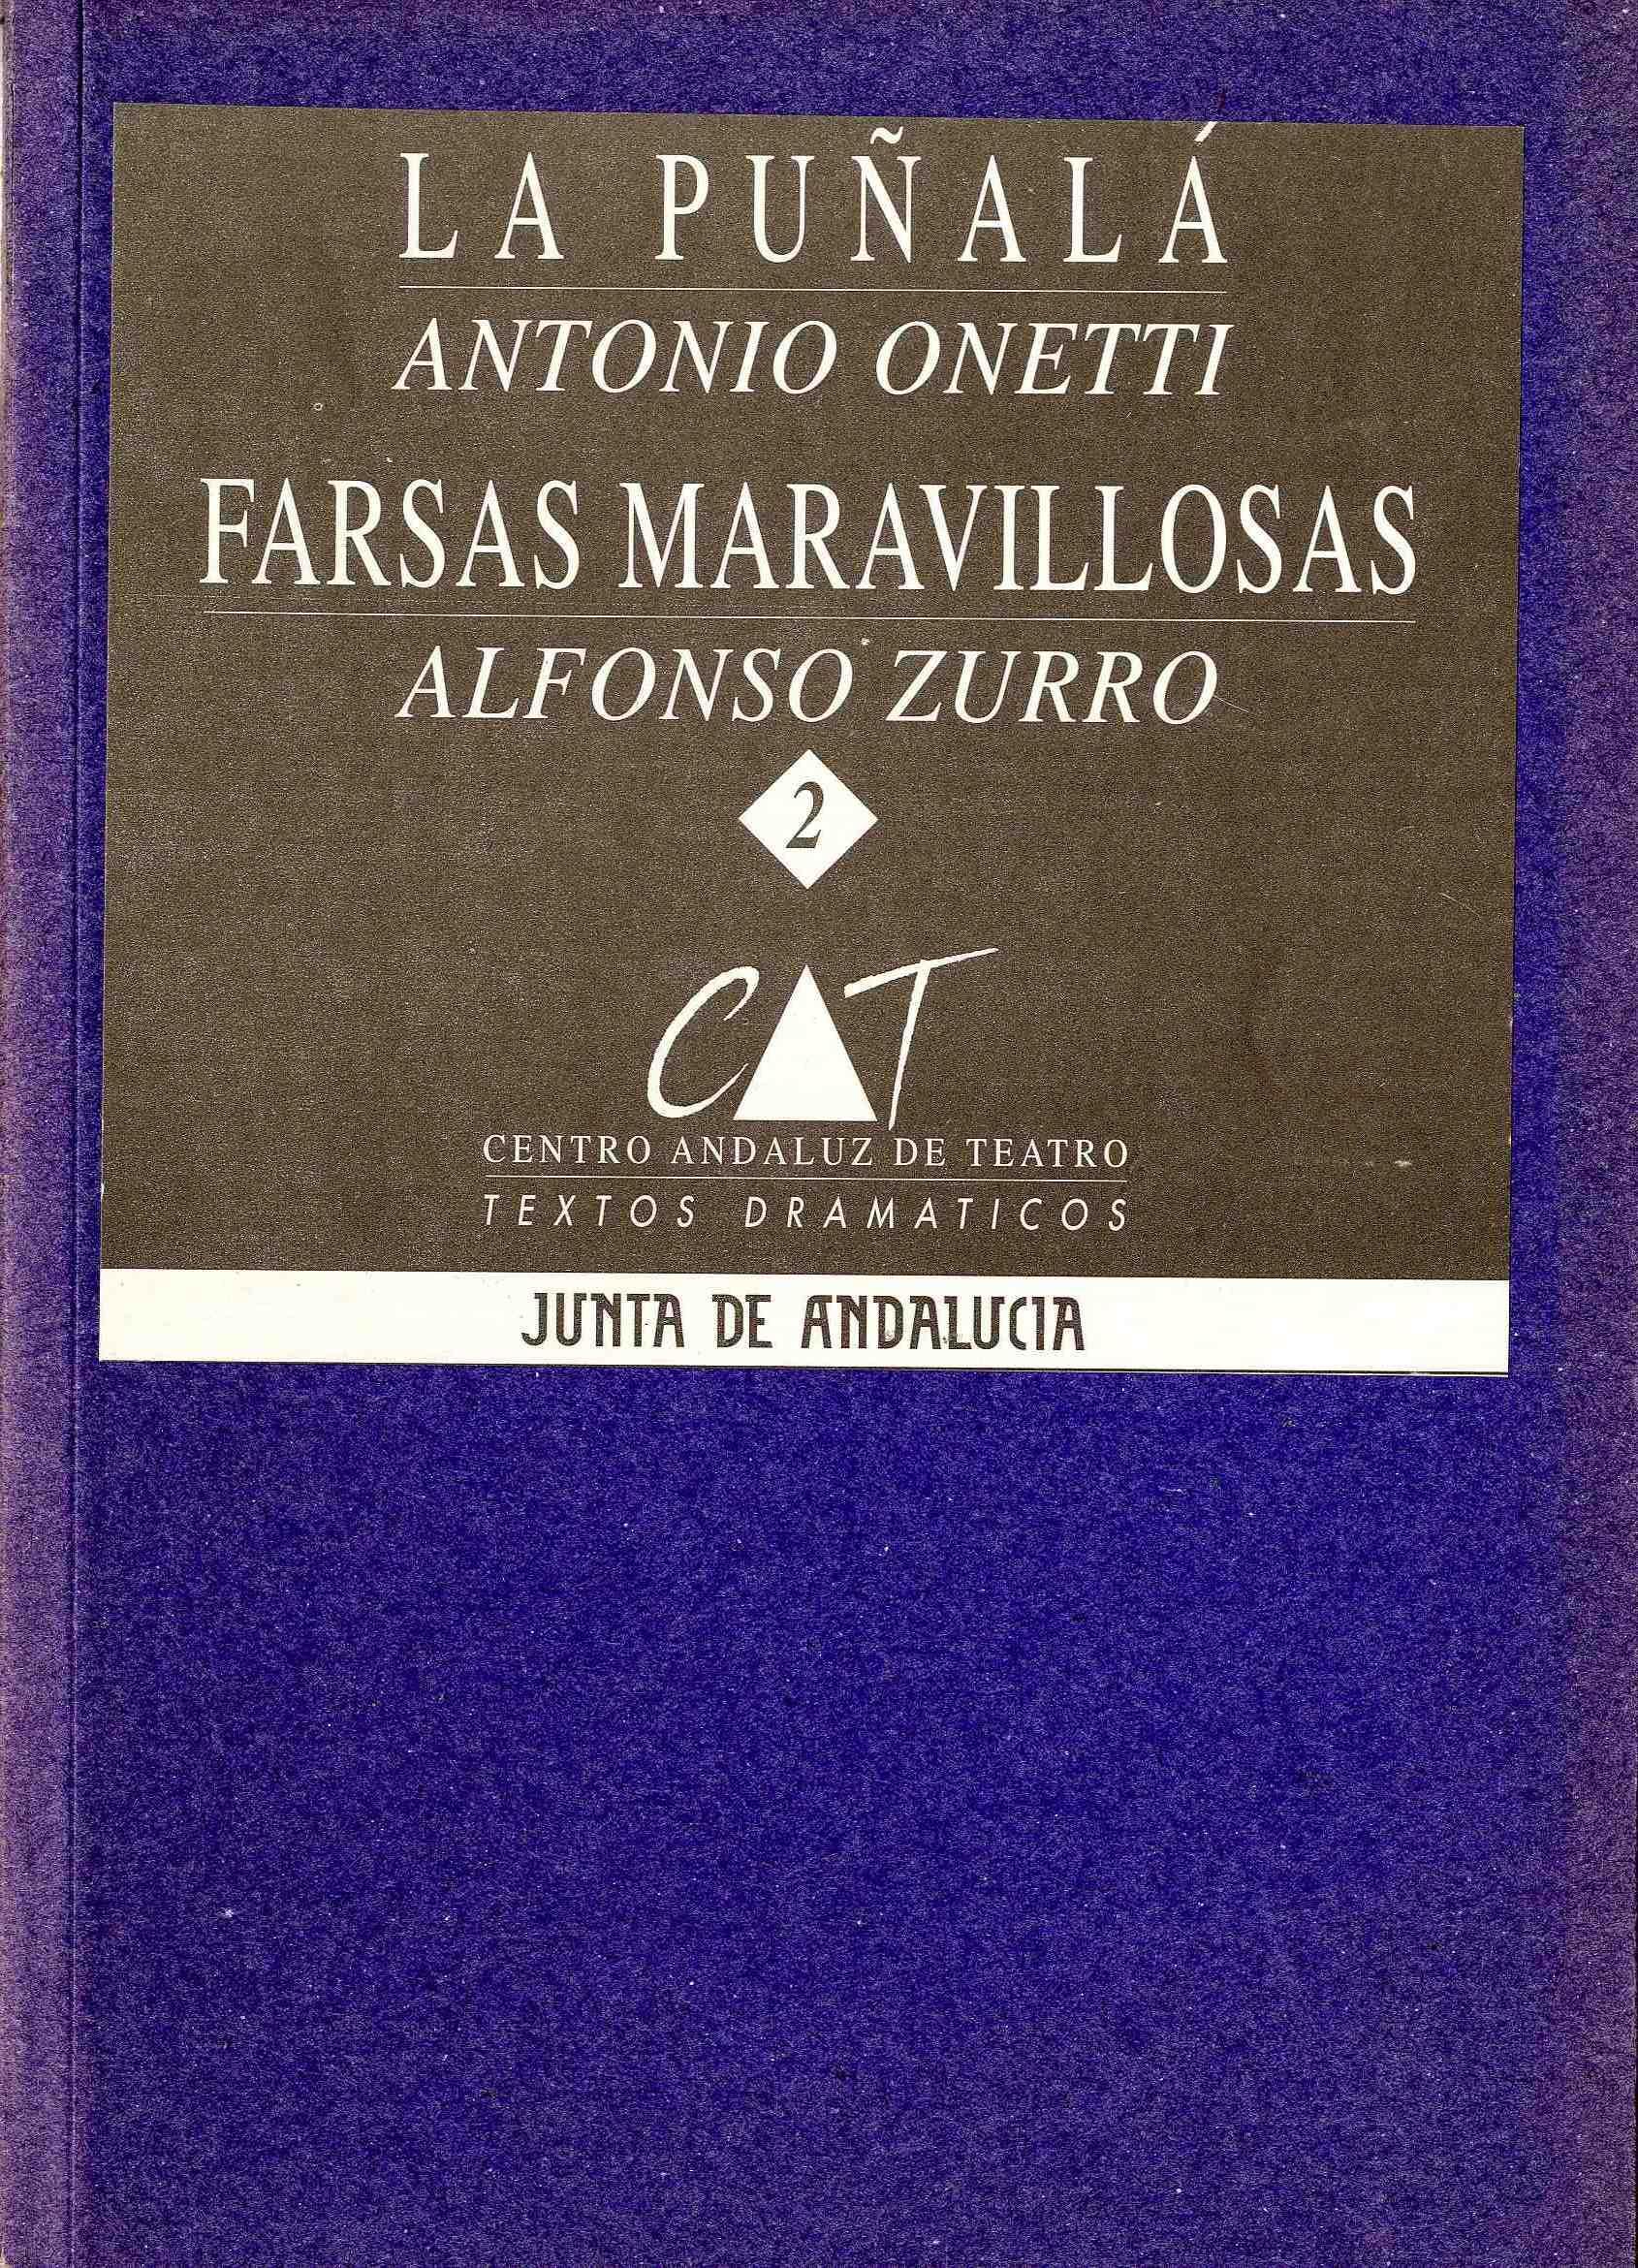 "Farsas maravillosas", de Alfonso Zurro